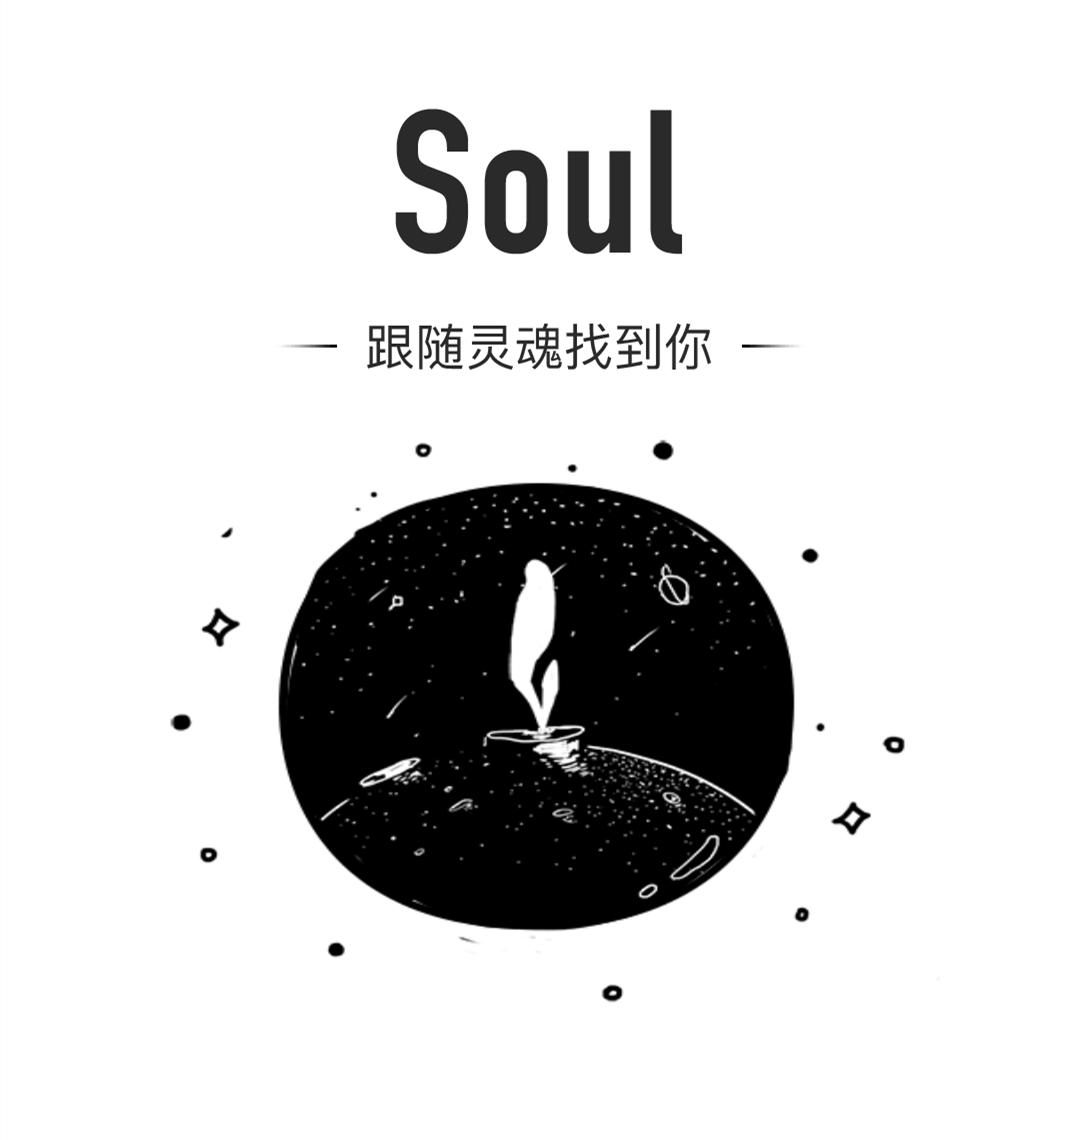 soul个人主页背景图片